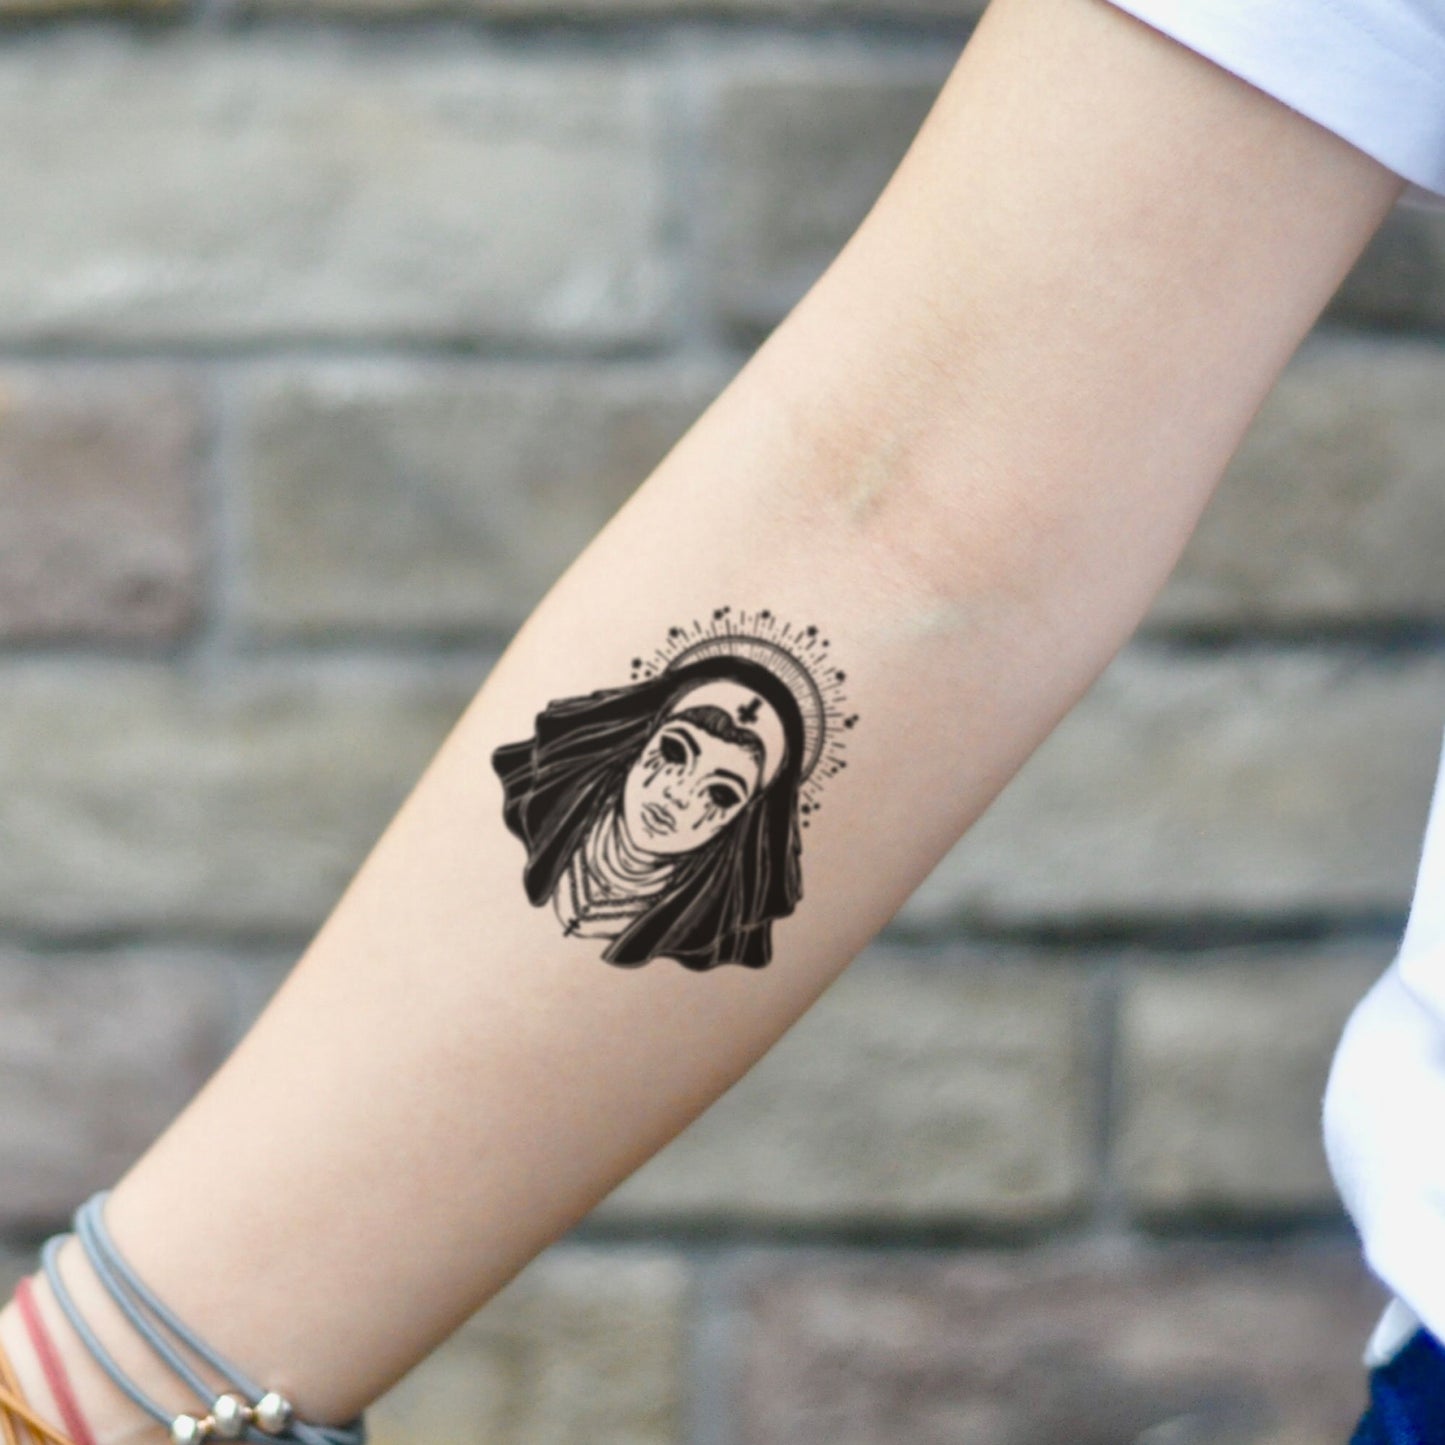 fake small nun priest dark creepy illustrative temporary tattoo sticker design idea on inner arm